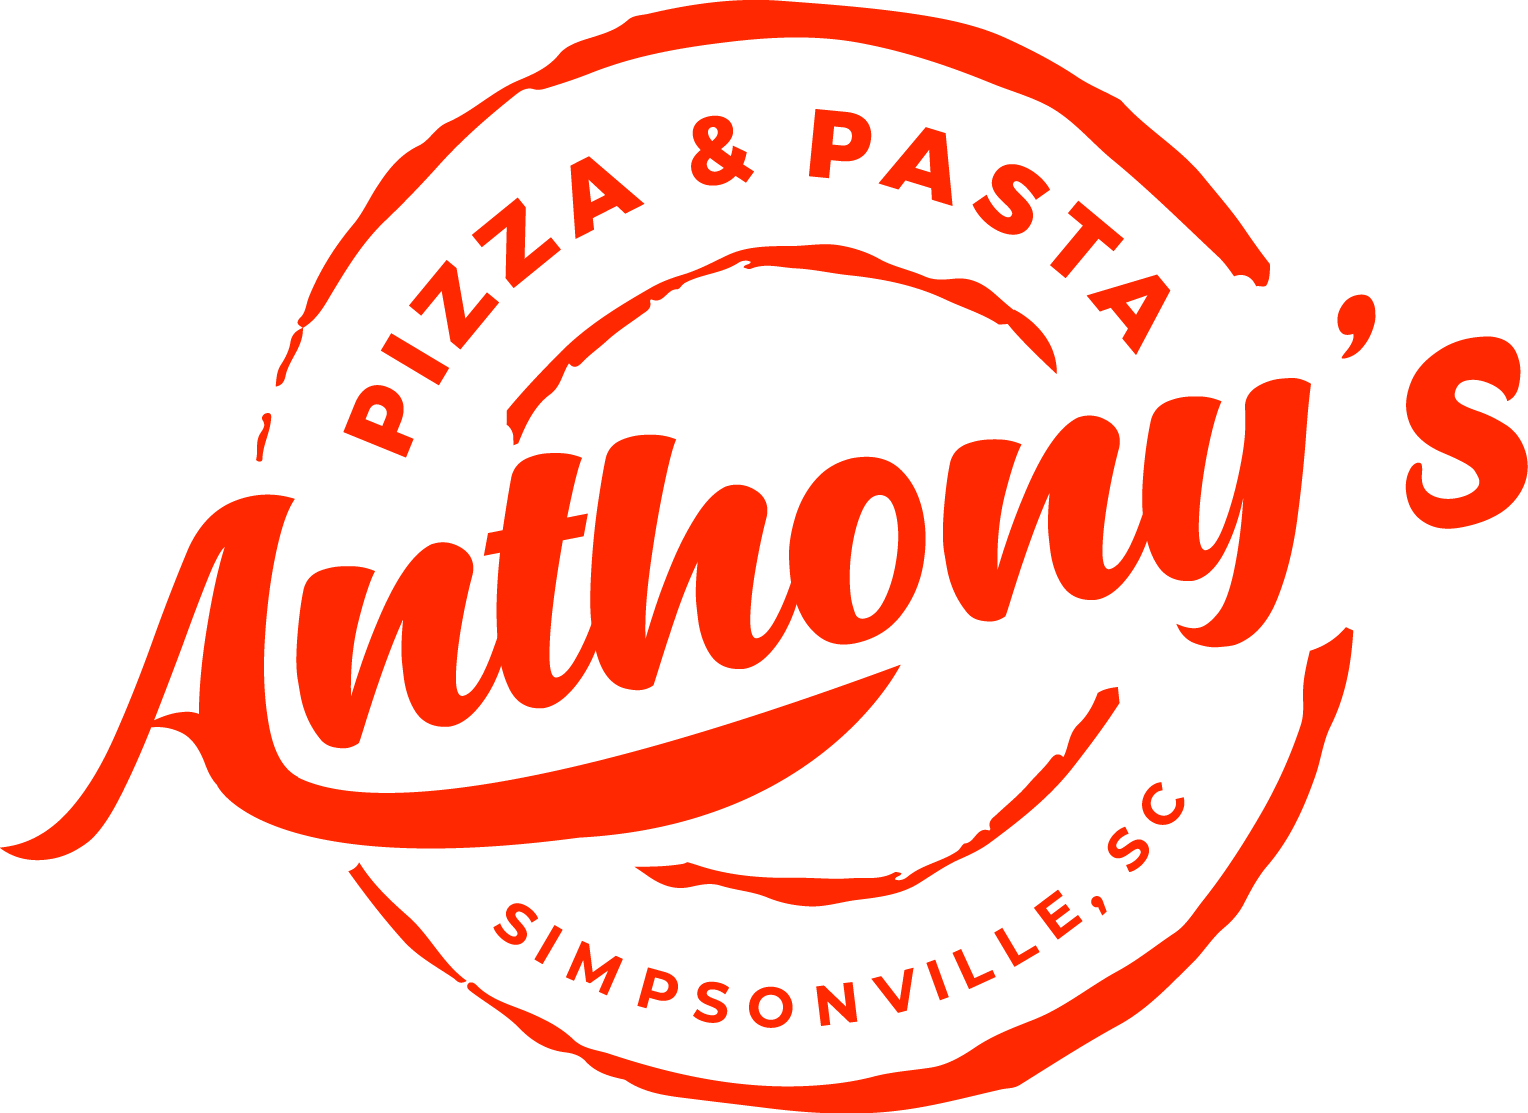 Anthony's Pizzeria Home